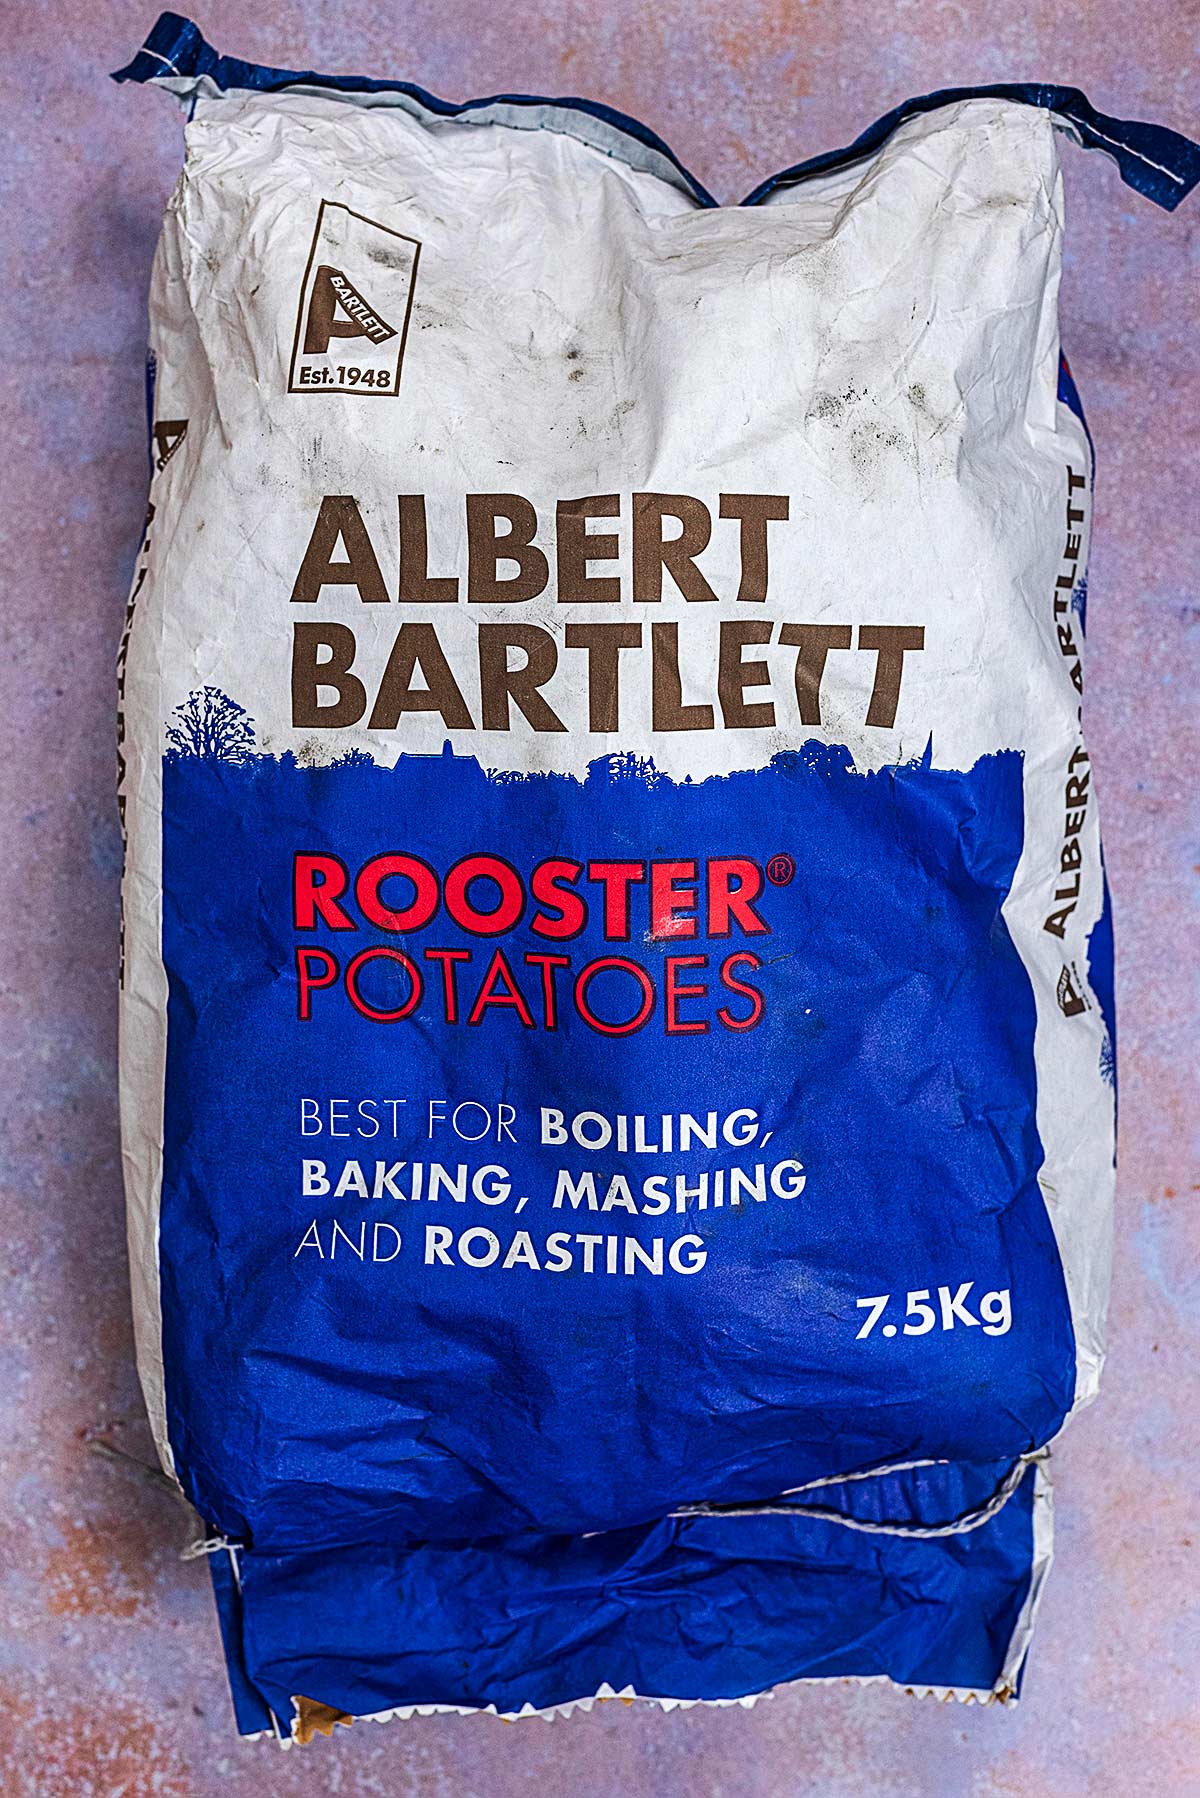 A 7.5 kilogram bag of Albert Bartlett potatoes.